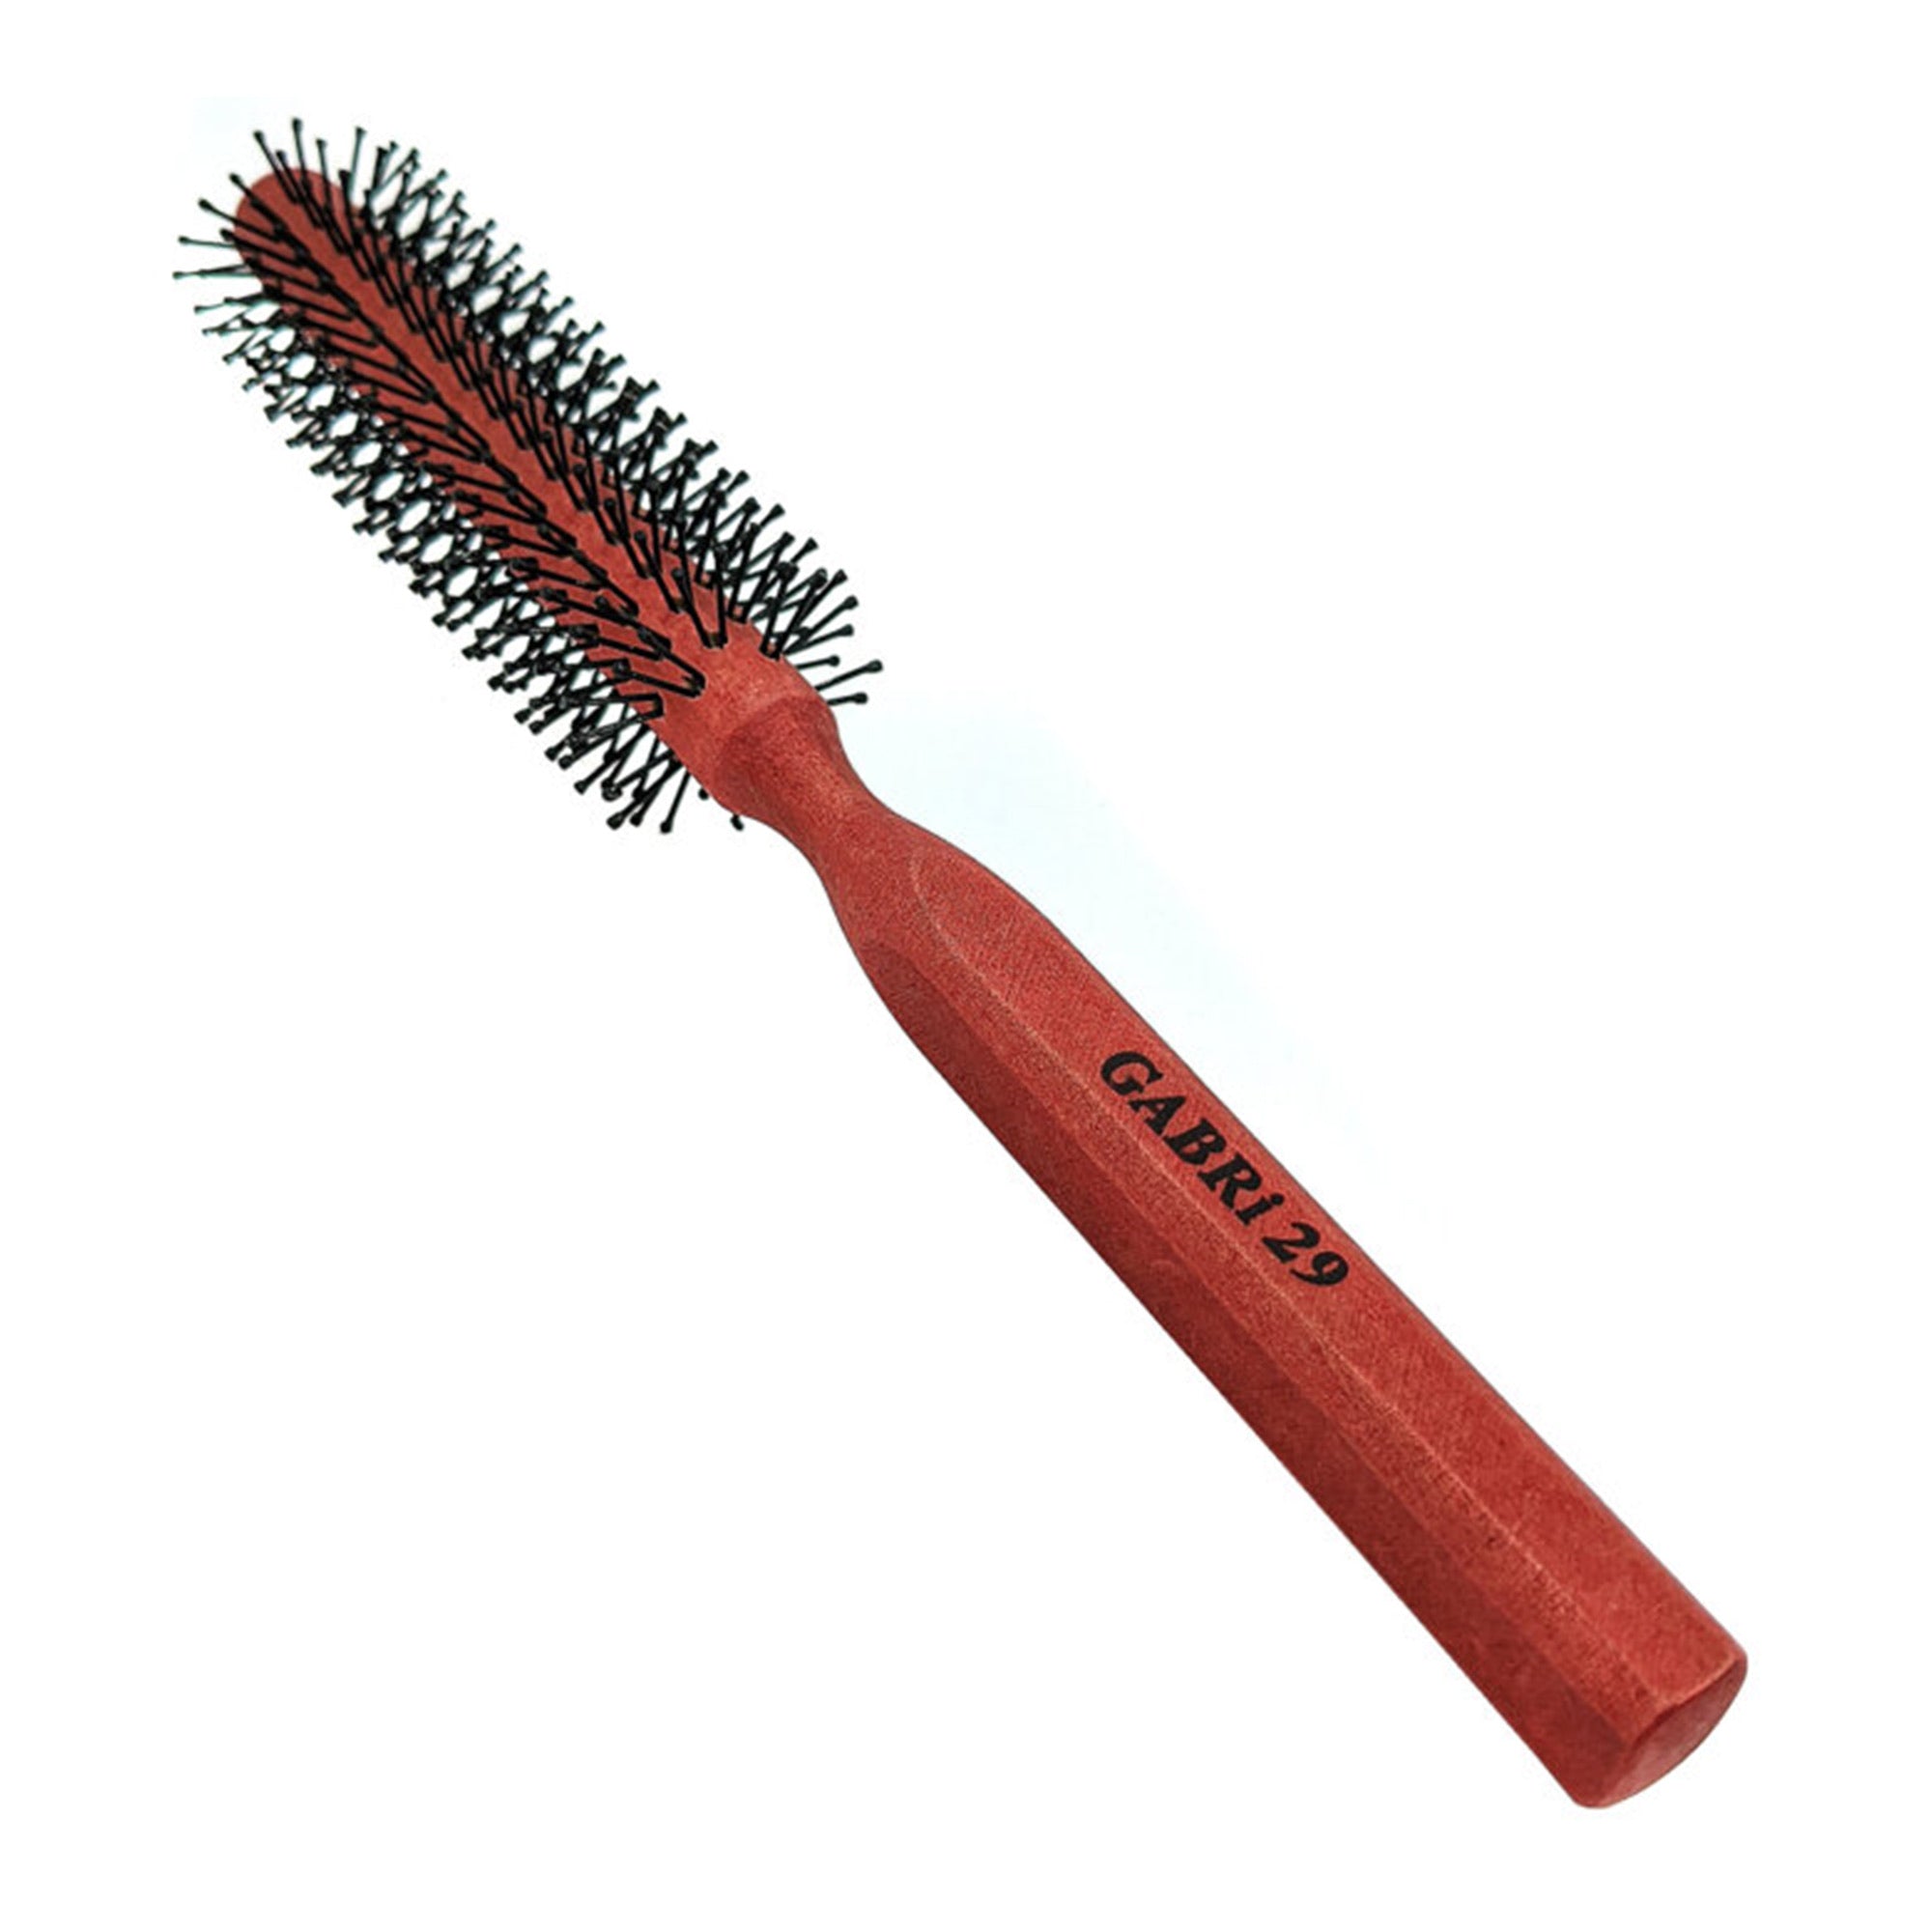 Eson - Radial Hair Brush No.29 23x3.5cm - Eson Direct